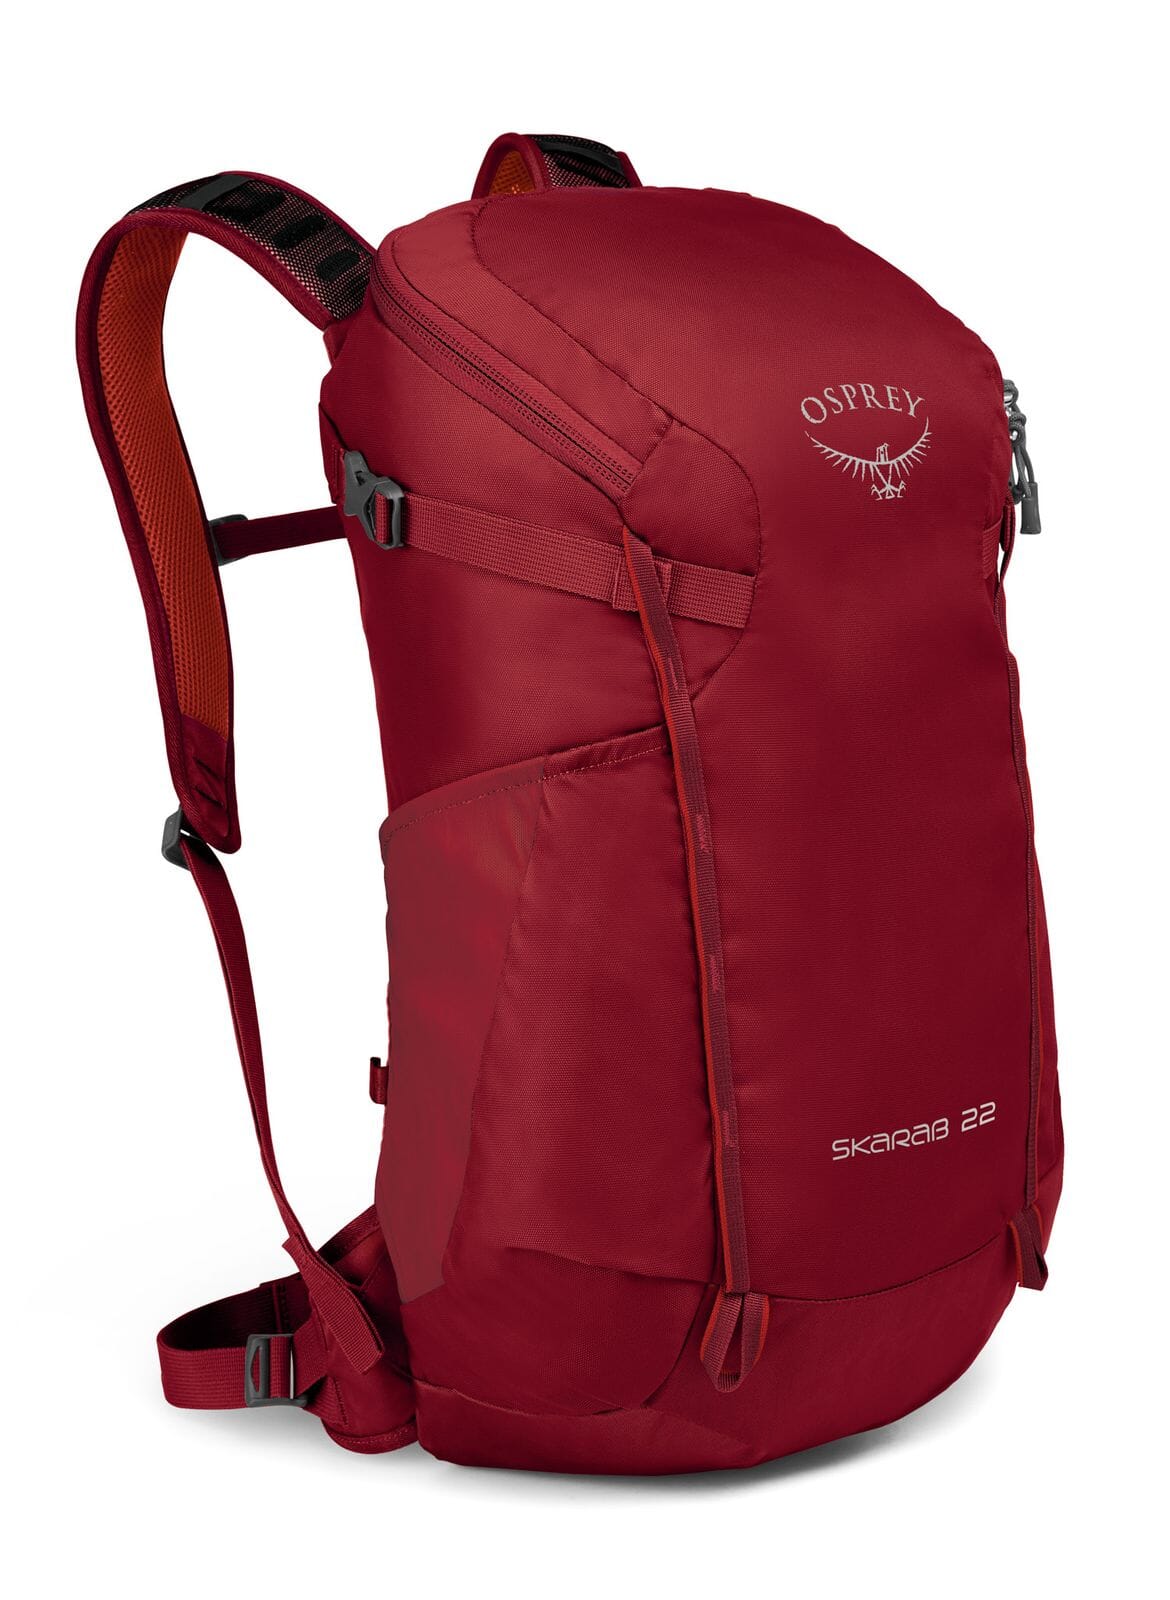 Osprey Skarab 22L Unisex Hiking Backpack Mystic Red 